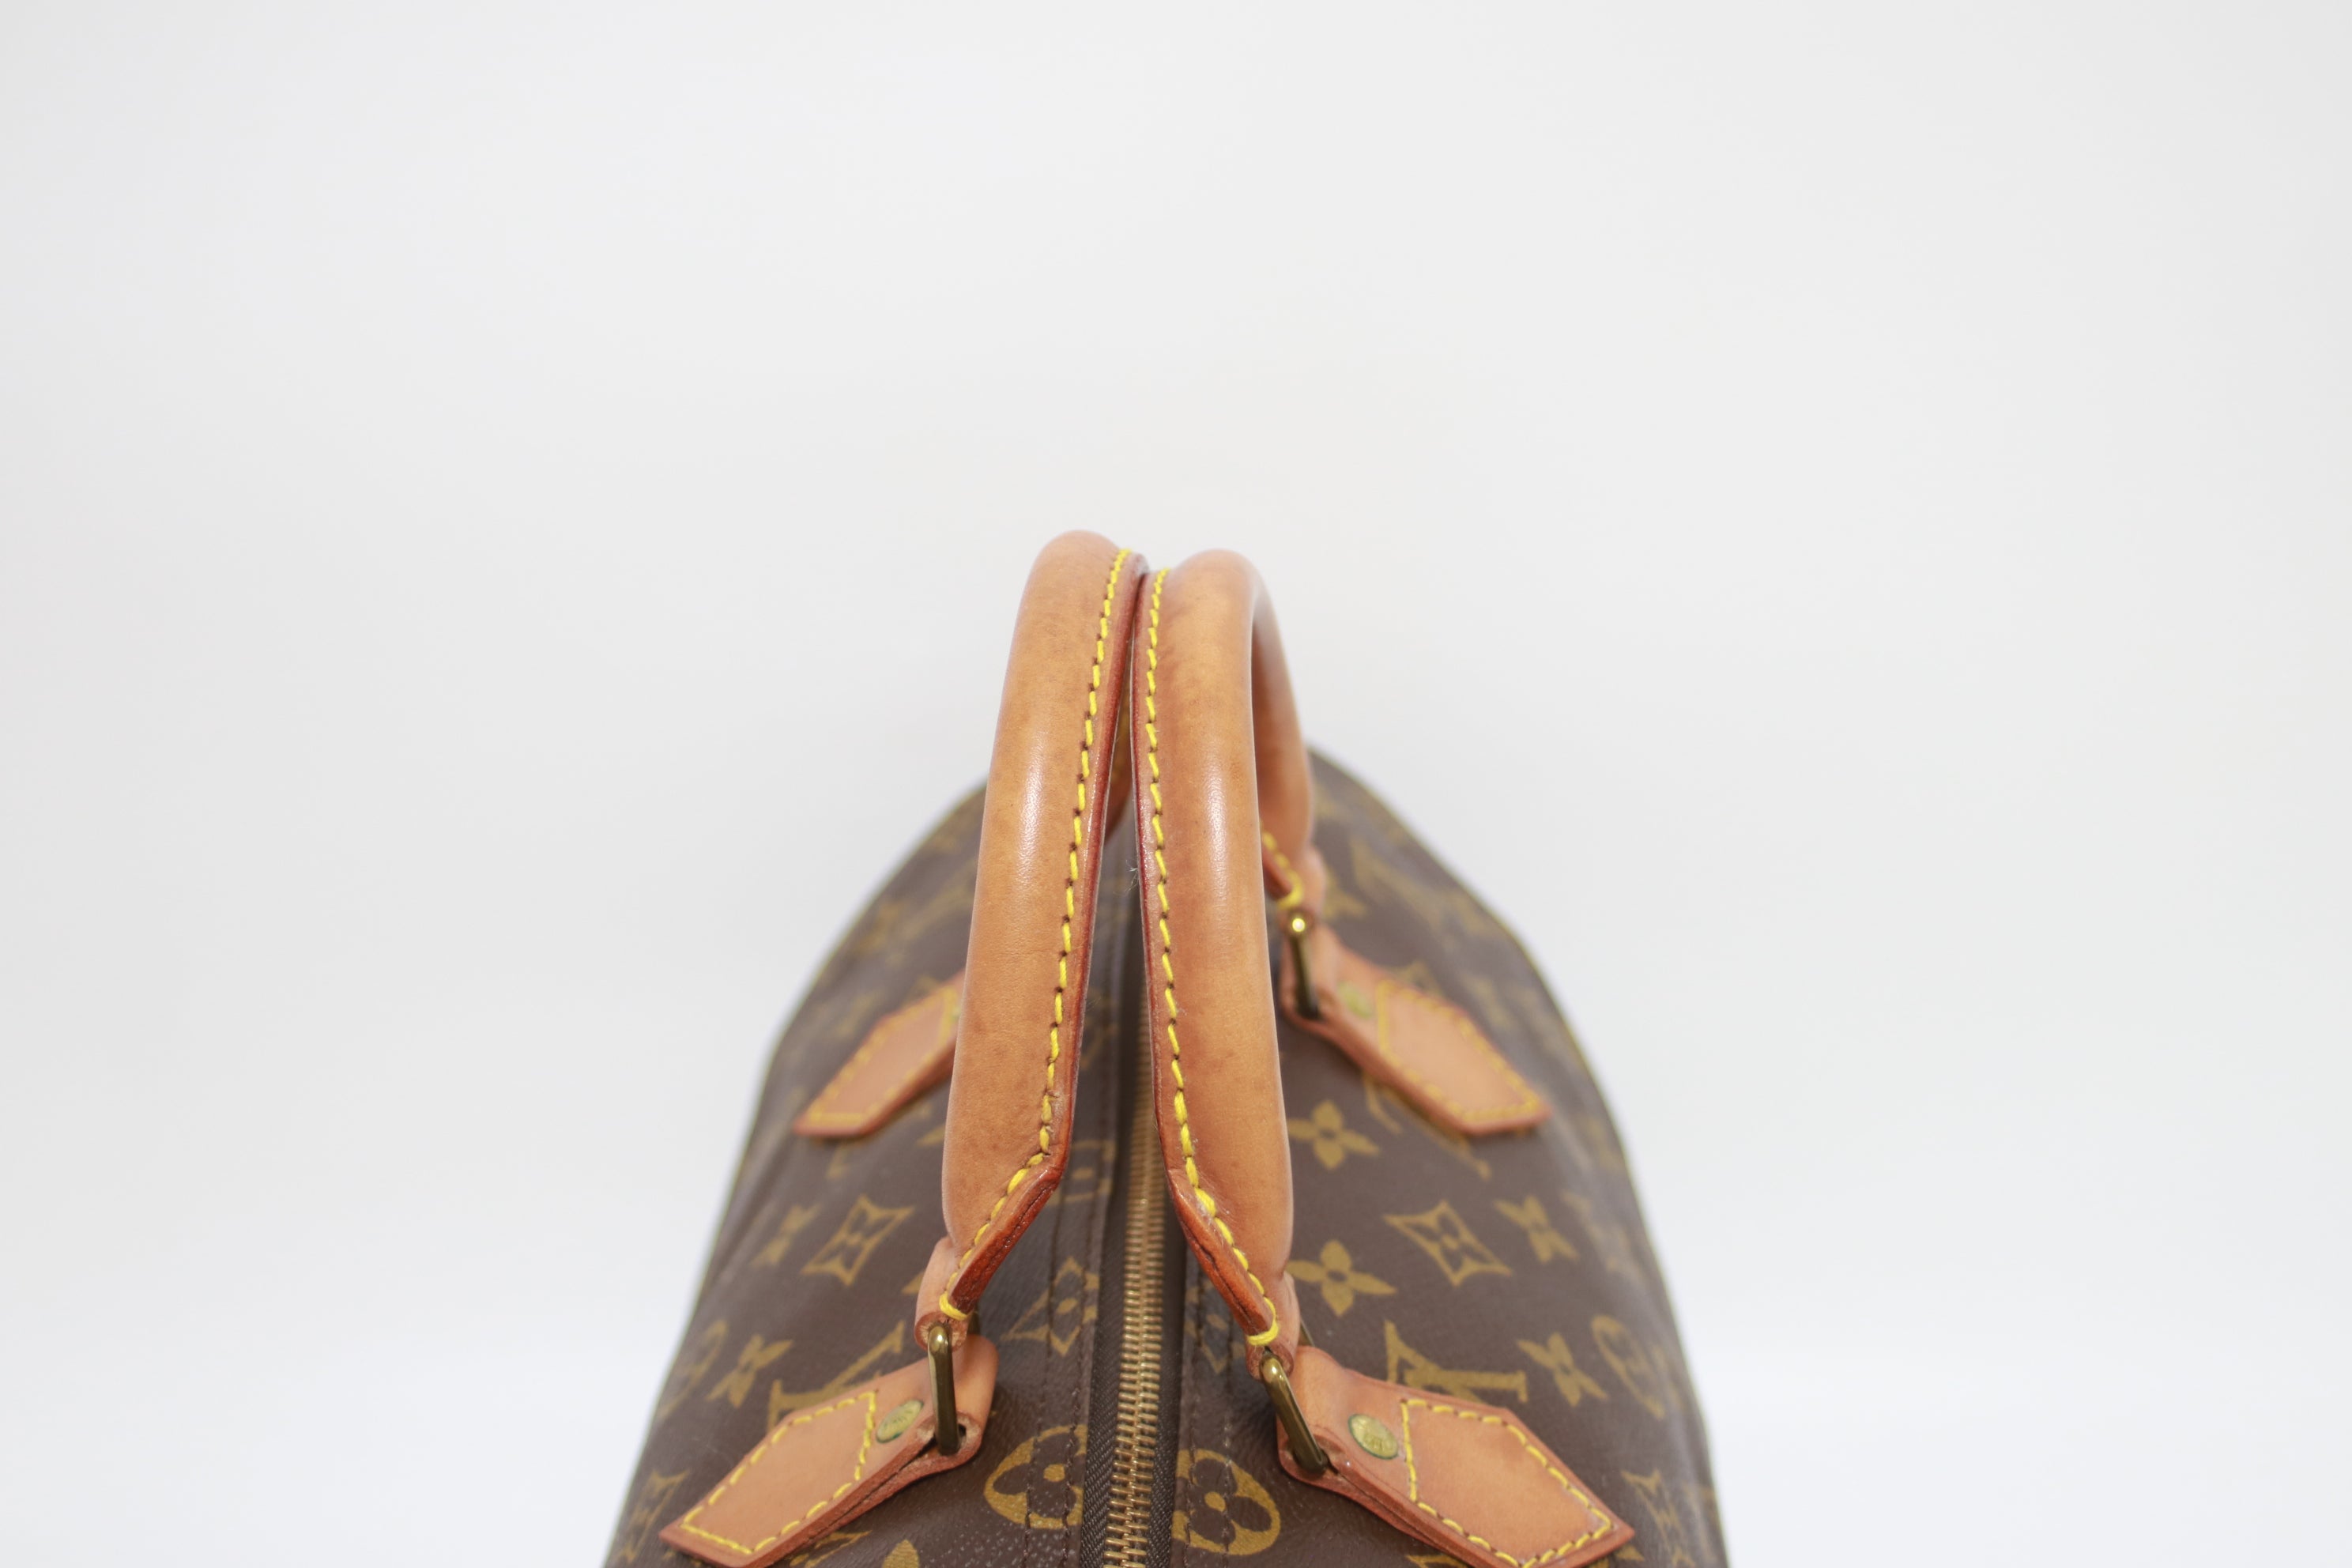 Louis Vuitton Speedy 35 Handbag Used (7400)